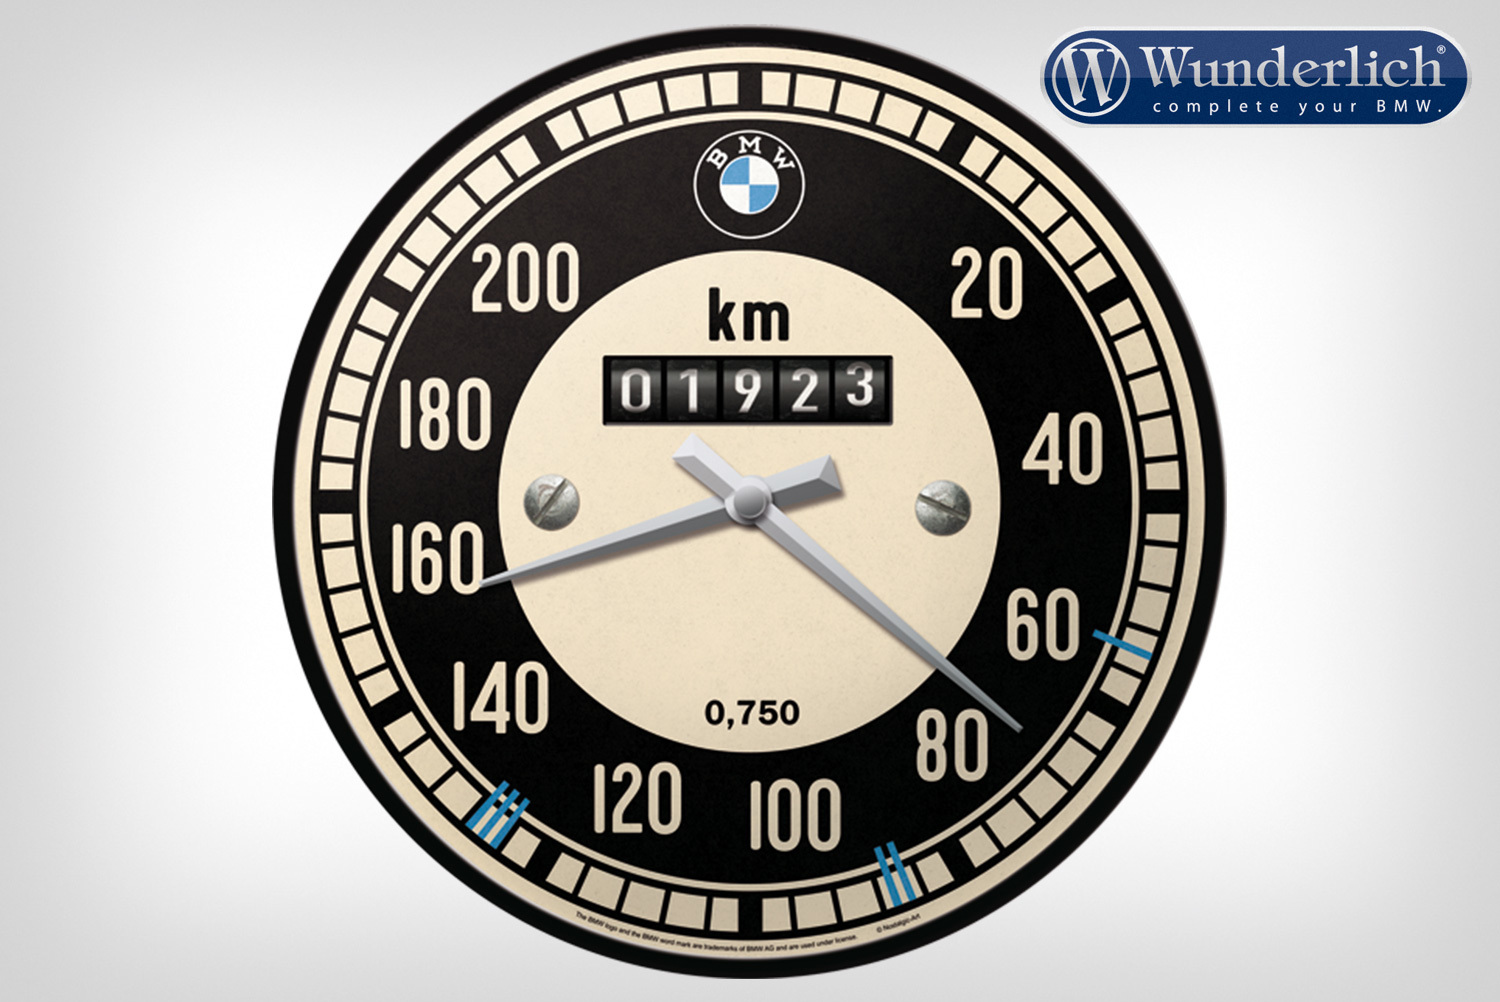 Циферблат спидометра. Часы BMW Speedometer. Часы настенные автомобильная тематика. Часы БМВ настенные. Циферблат спидометра мотоцикла.